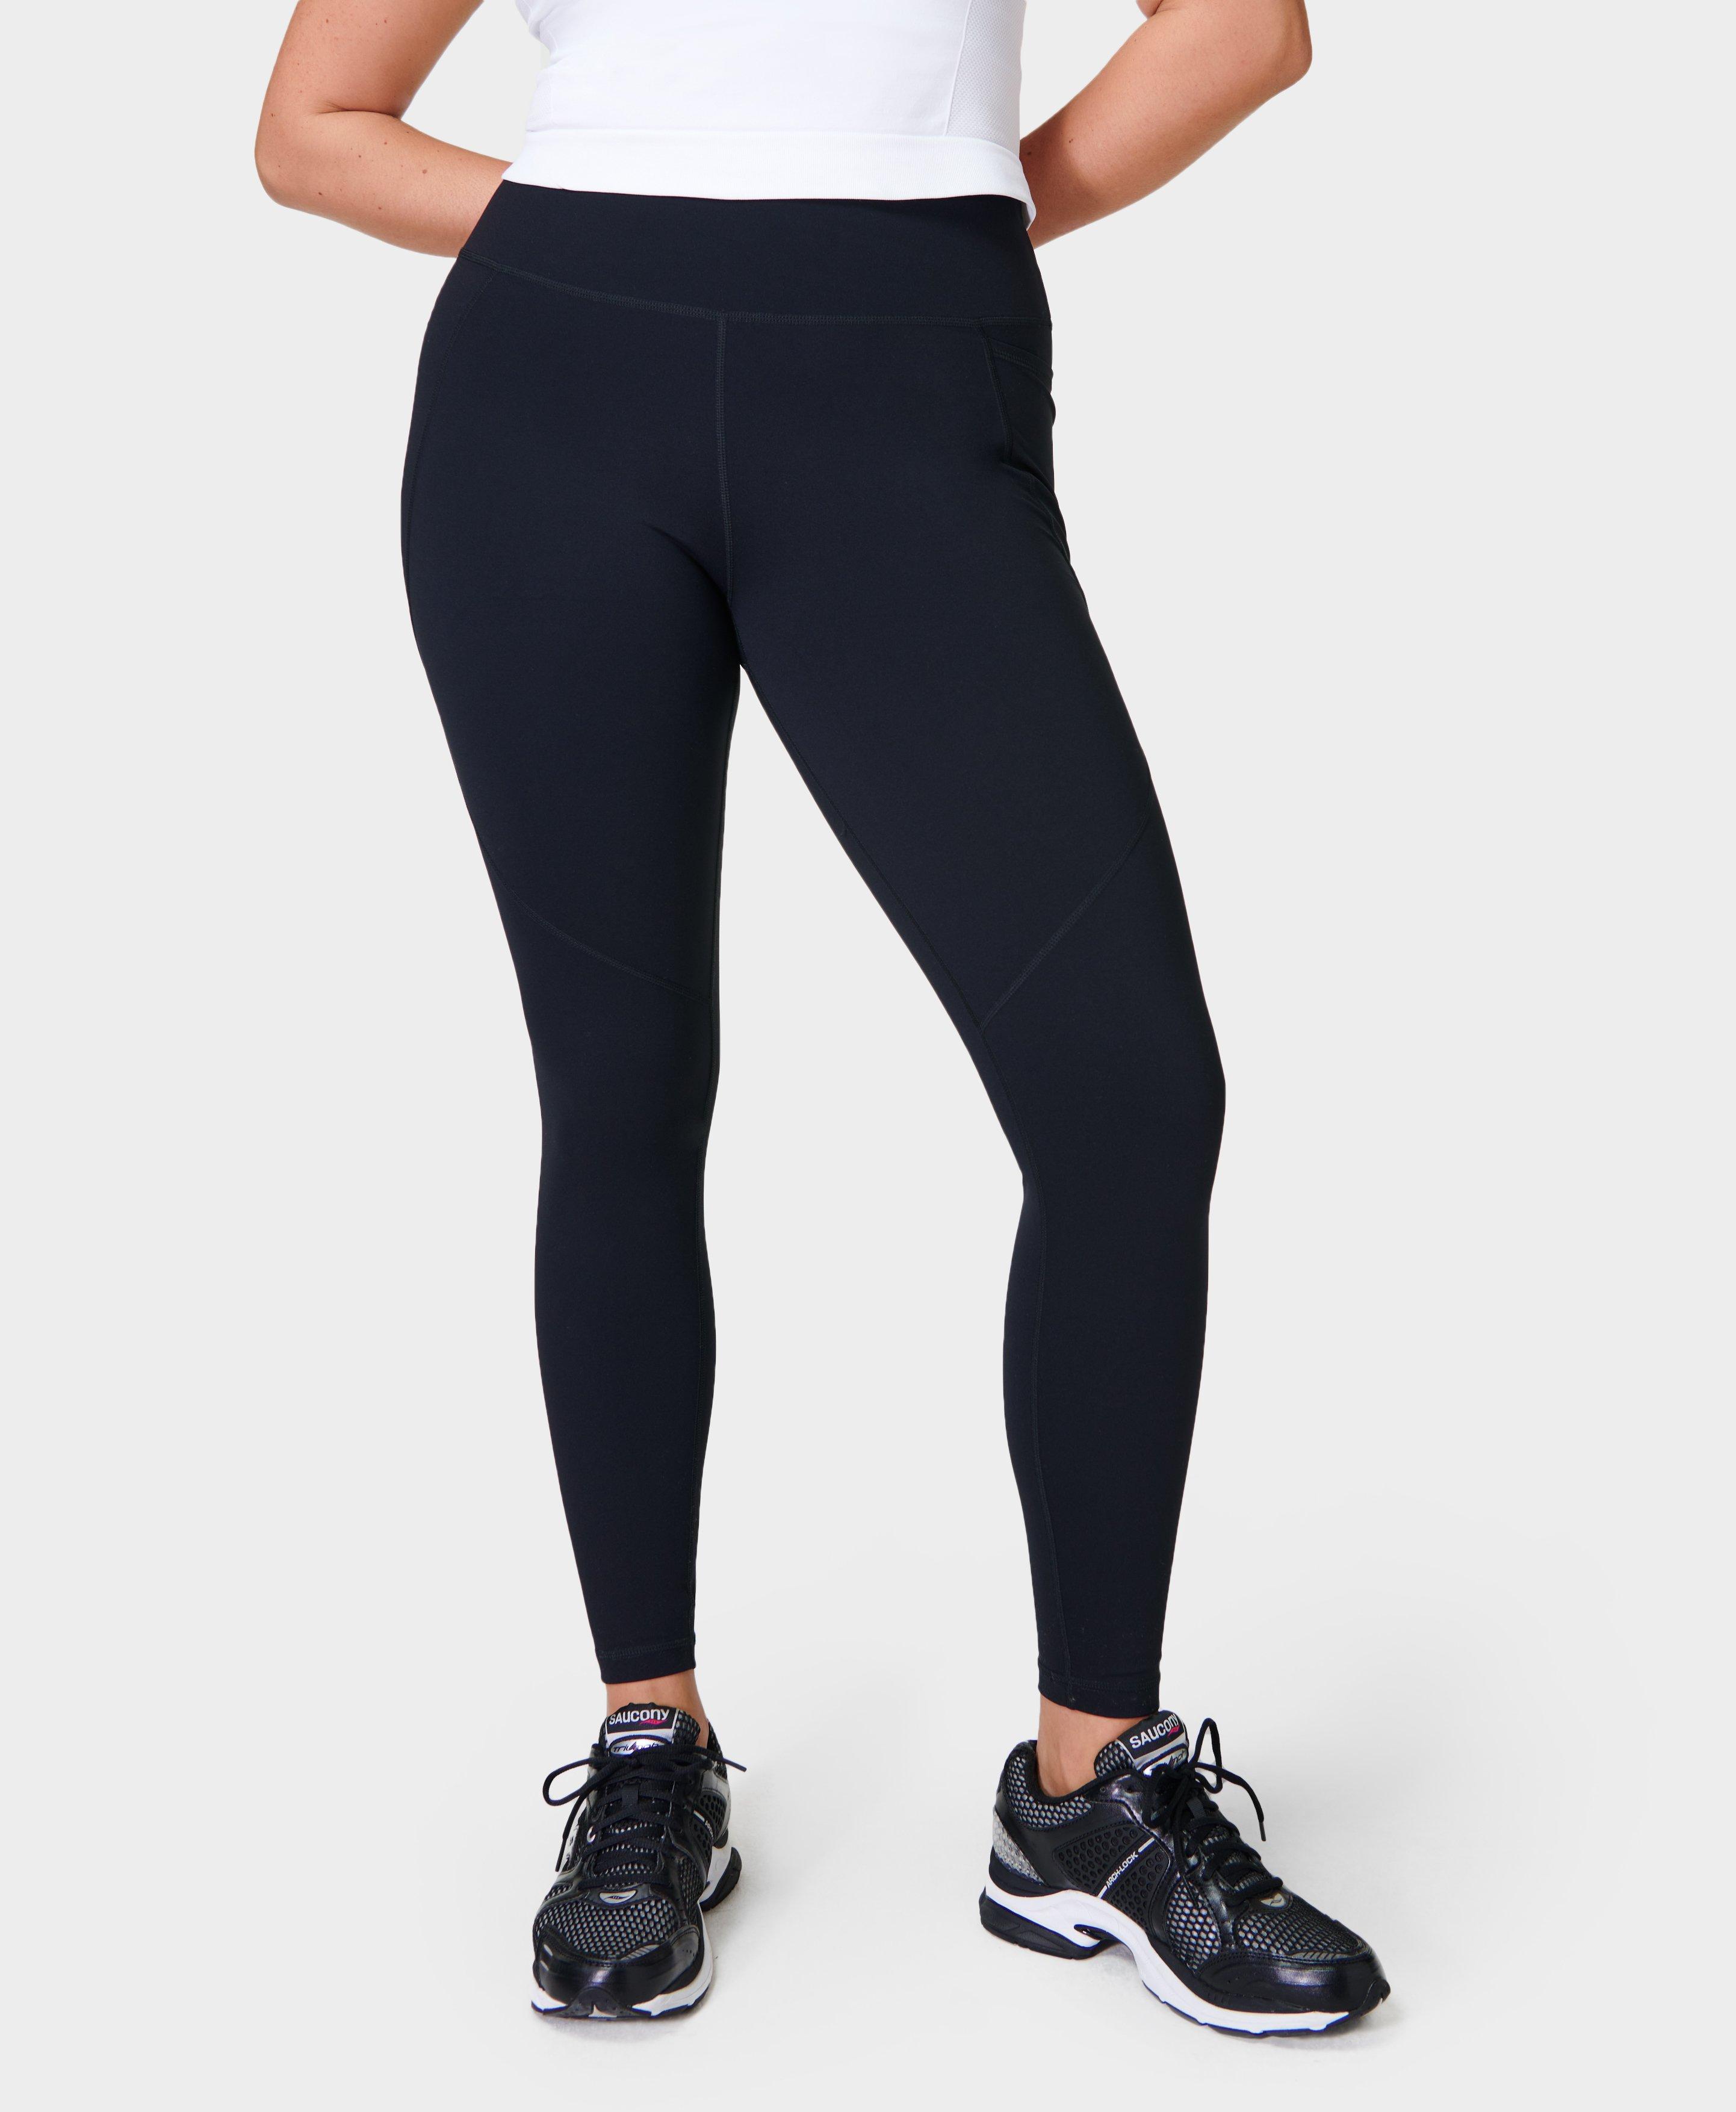 Black Glisten Here Leggings  Buy Workout Leggings – Constantly Varied Gear